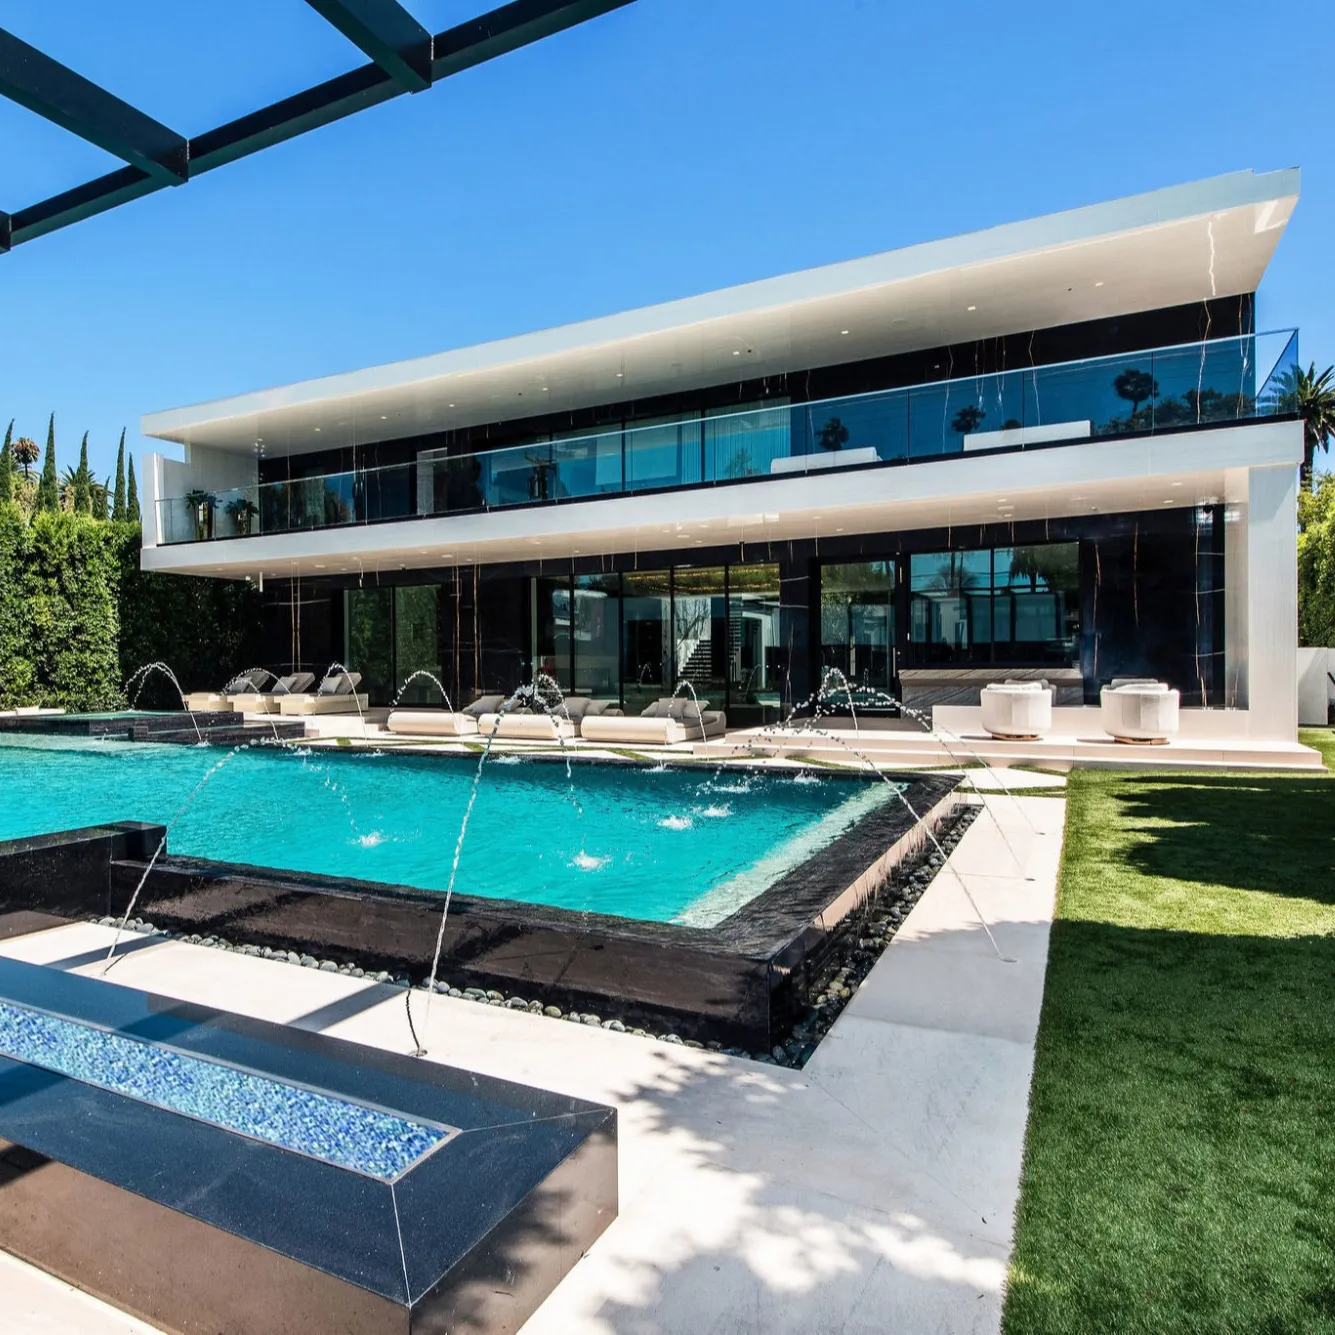 Villa dua cerita rumah Prefab struktur baja ringan prefabrikasi desain grafis tahan air lantai marmer Modern